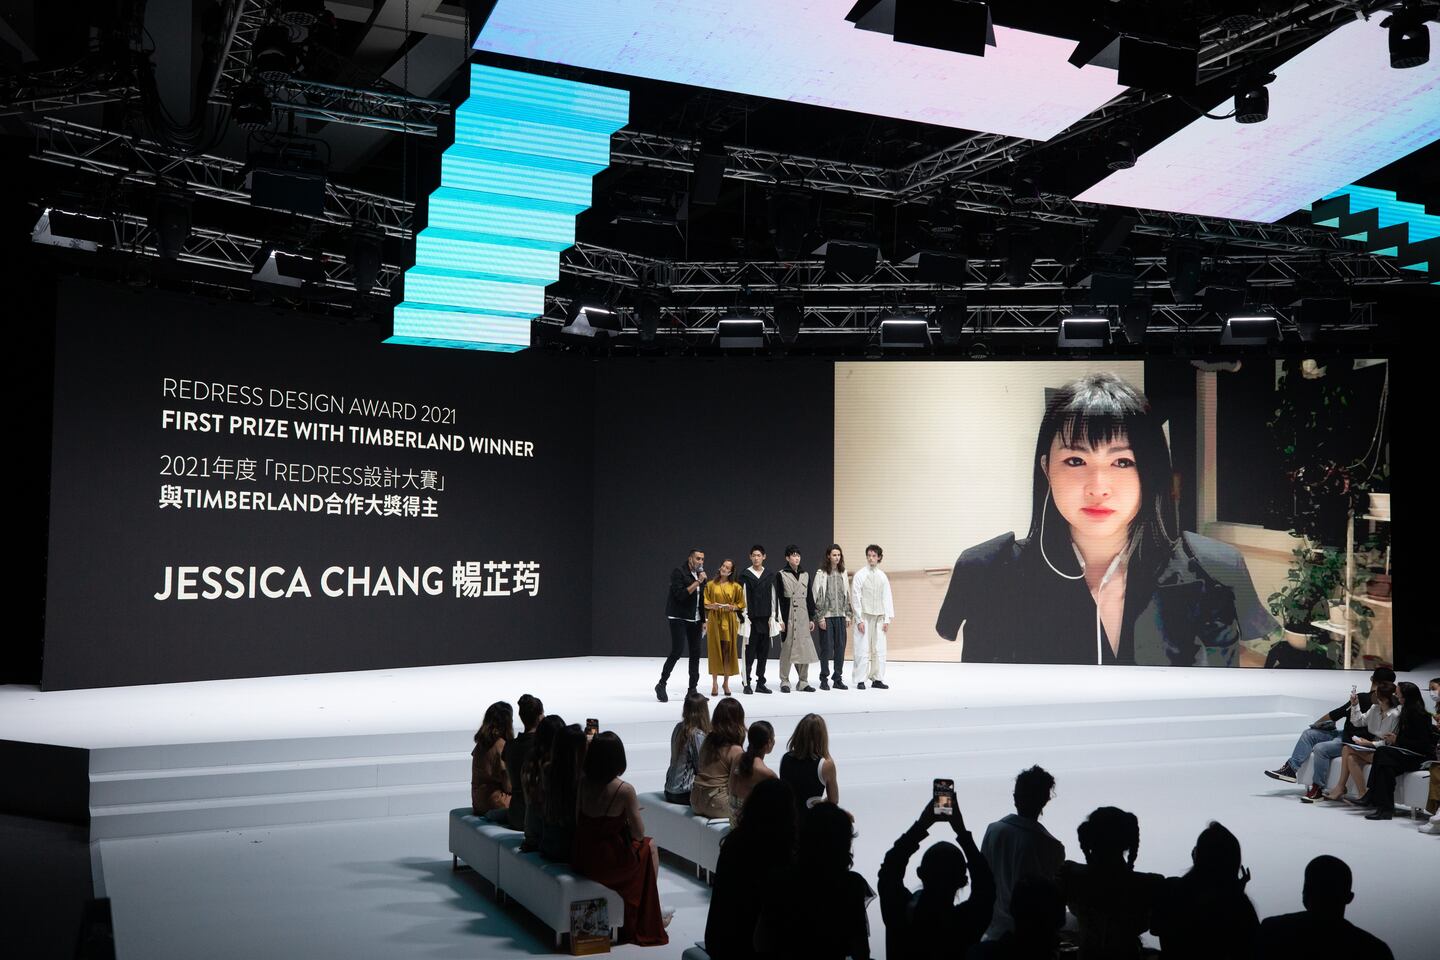 Jessica Chang won first prize at the Redress Design Awards 2021. Redress